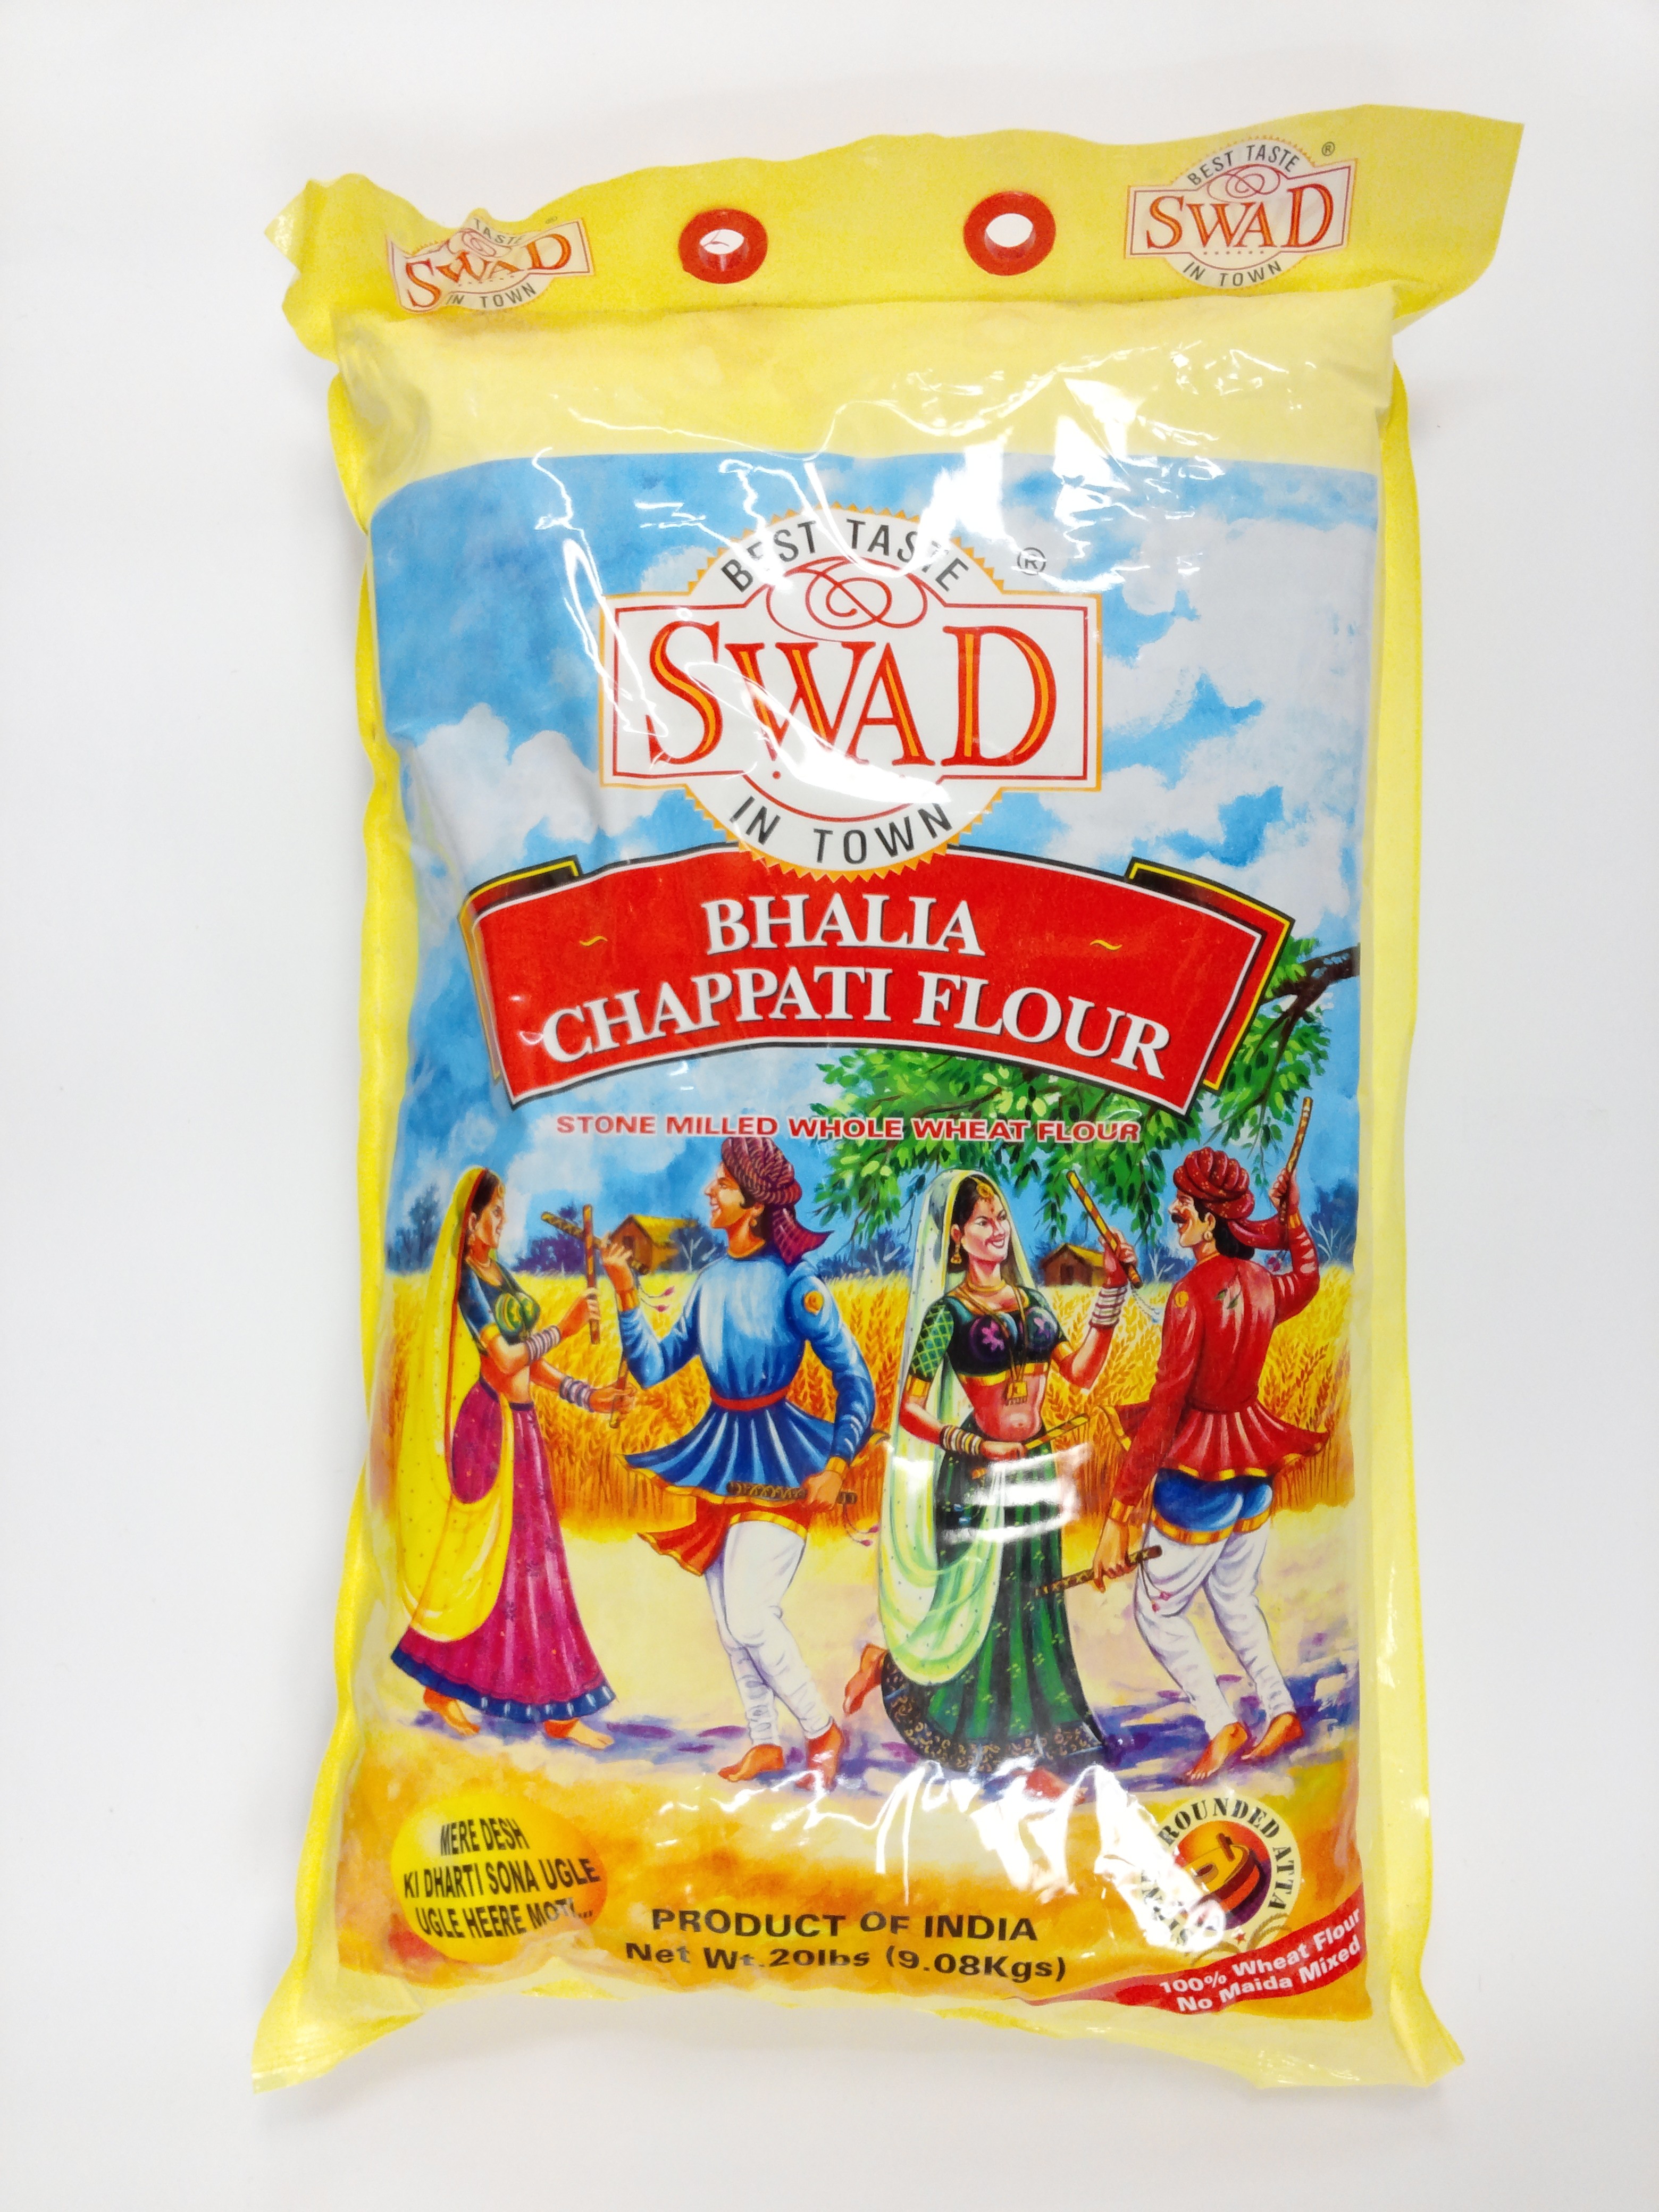 Swad Whole Wheat Chappati Flour(Bhalia) 20 lbs